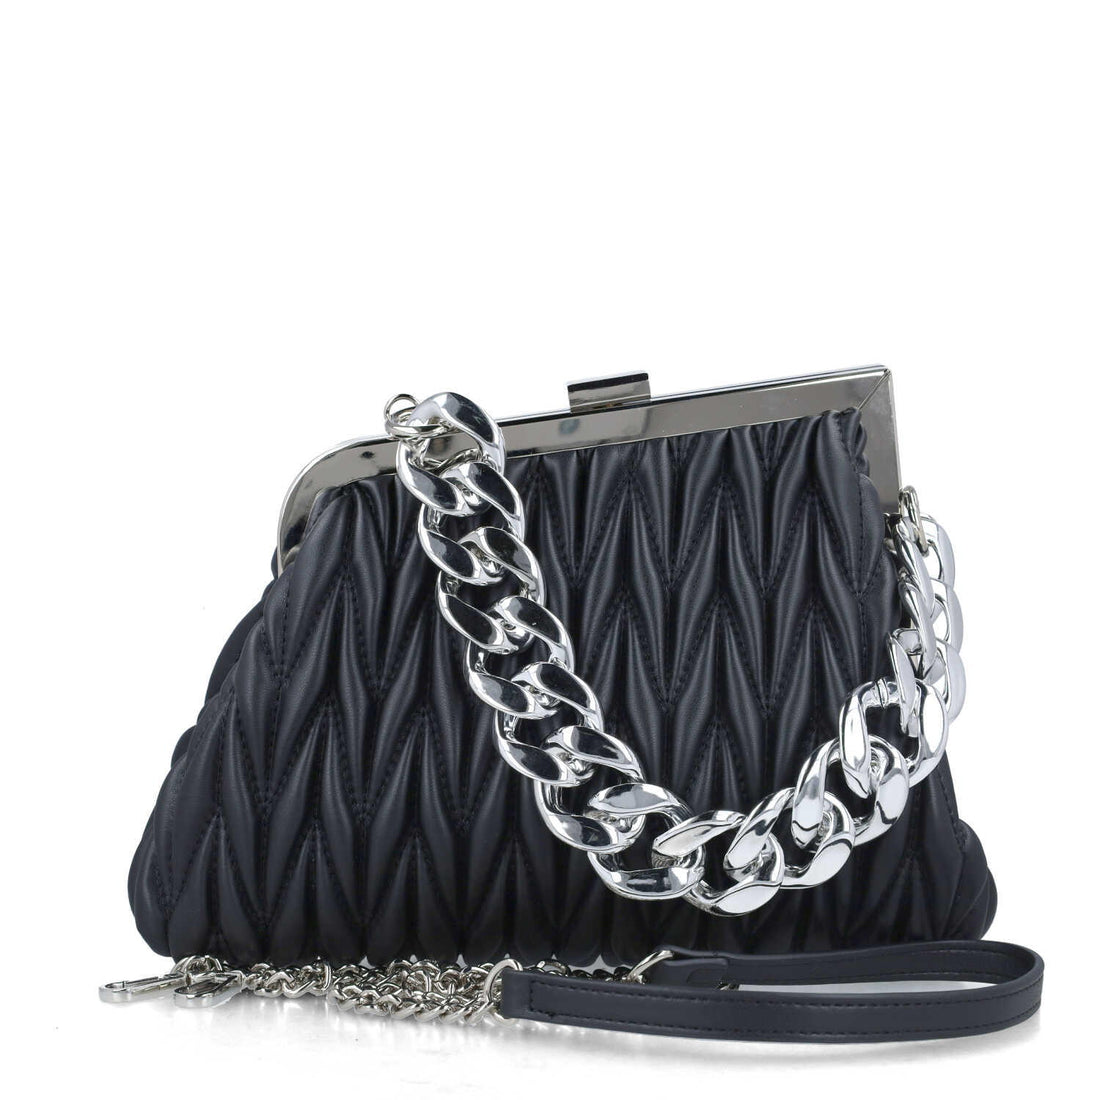 Black Handbag With Chain Strap_85678_01_01